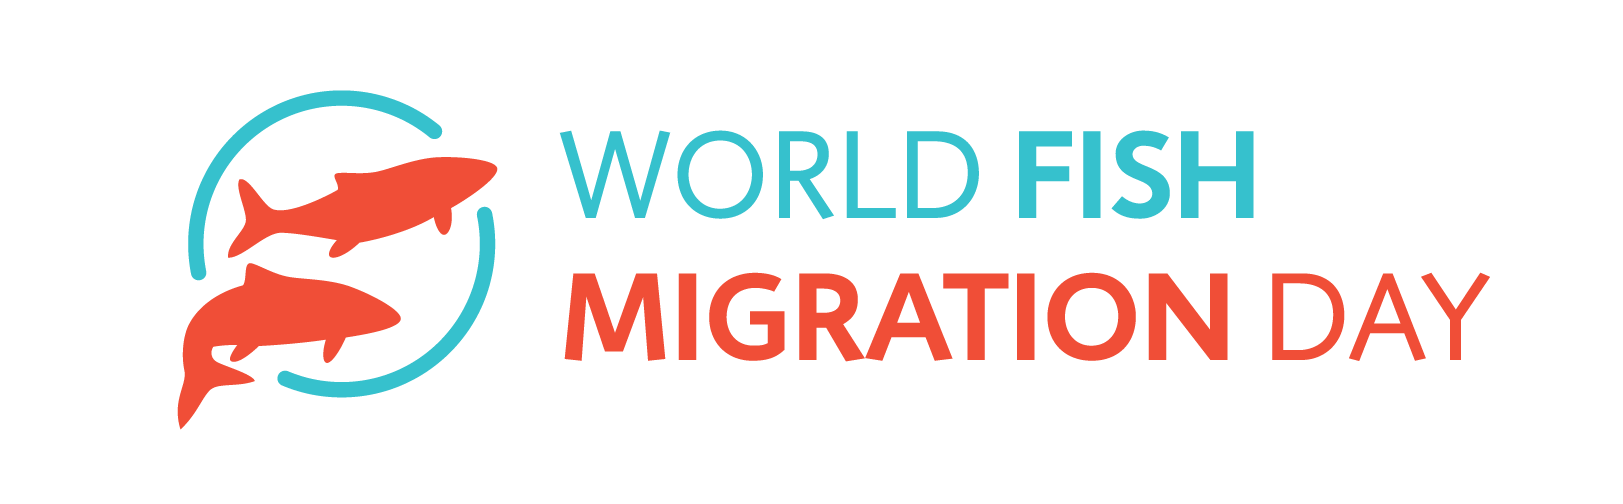 World Fish Migration Day logo